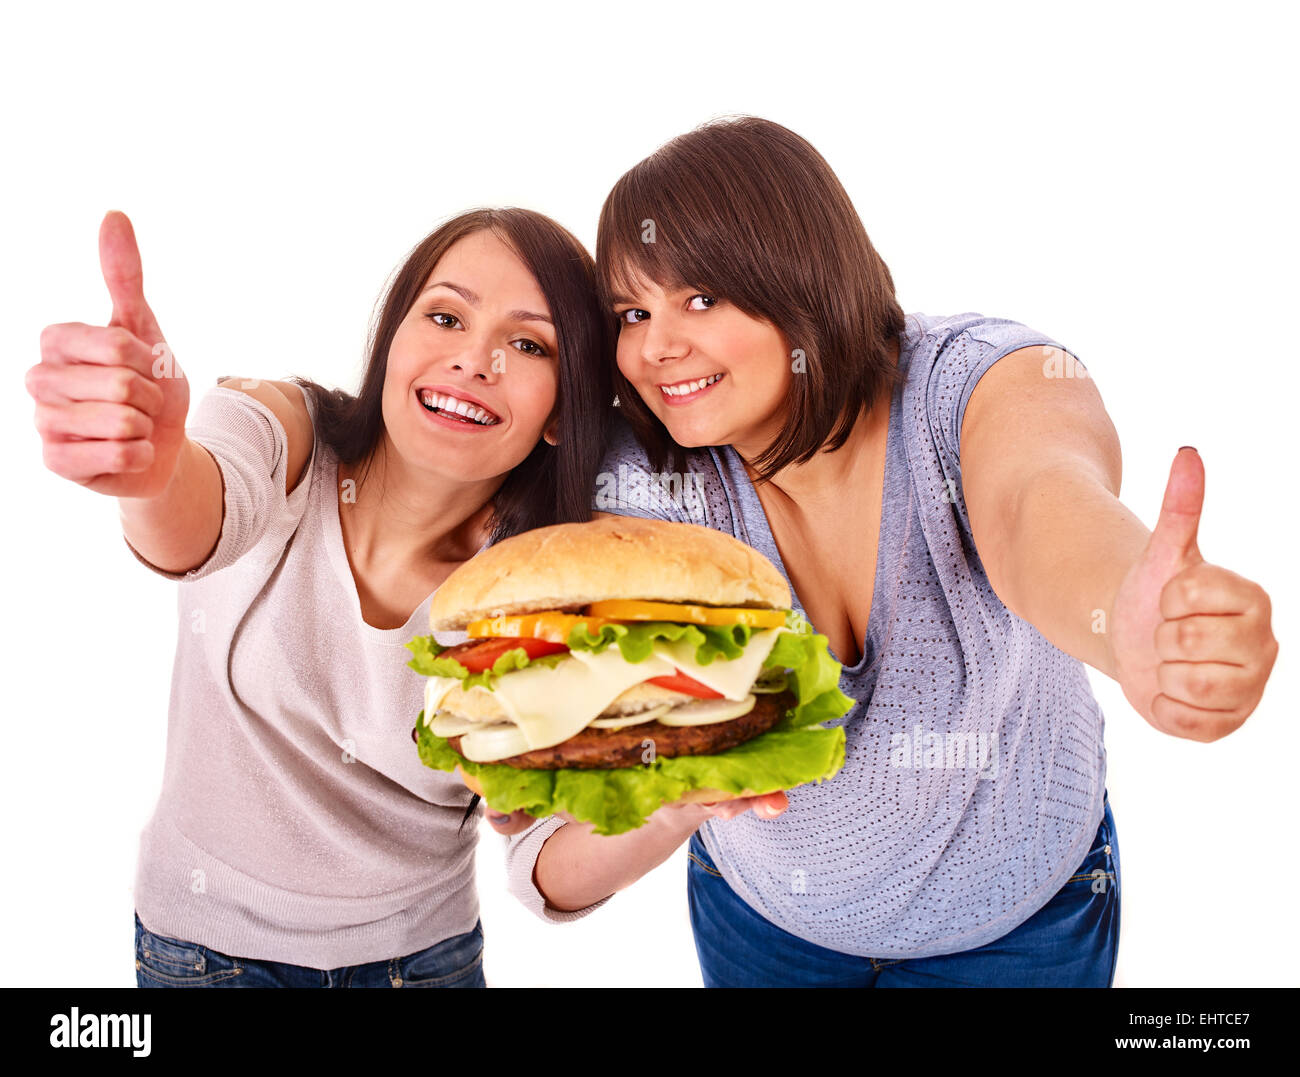 Women eating hamburger. Stock Photo